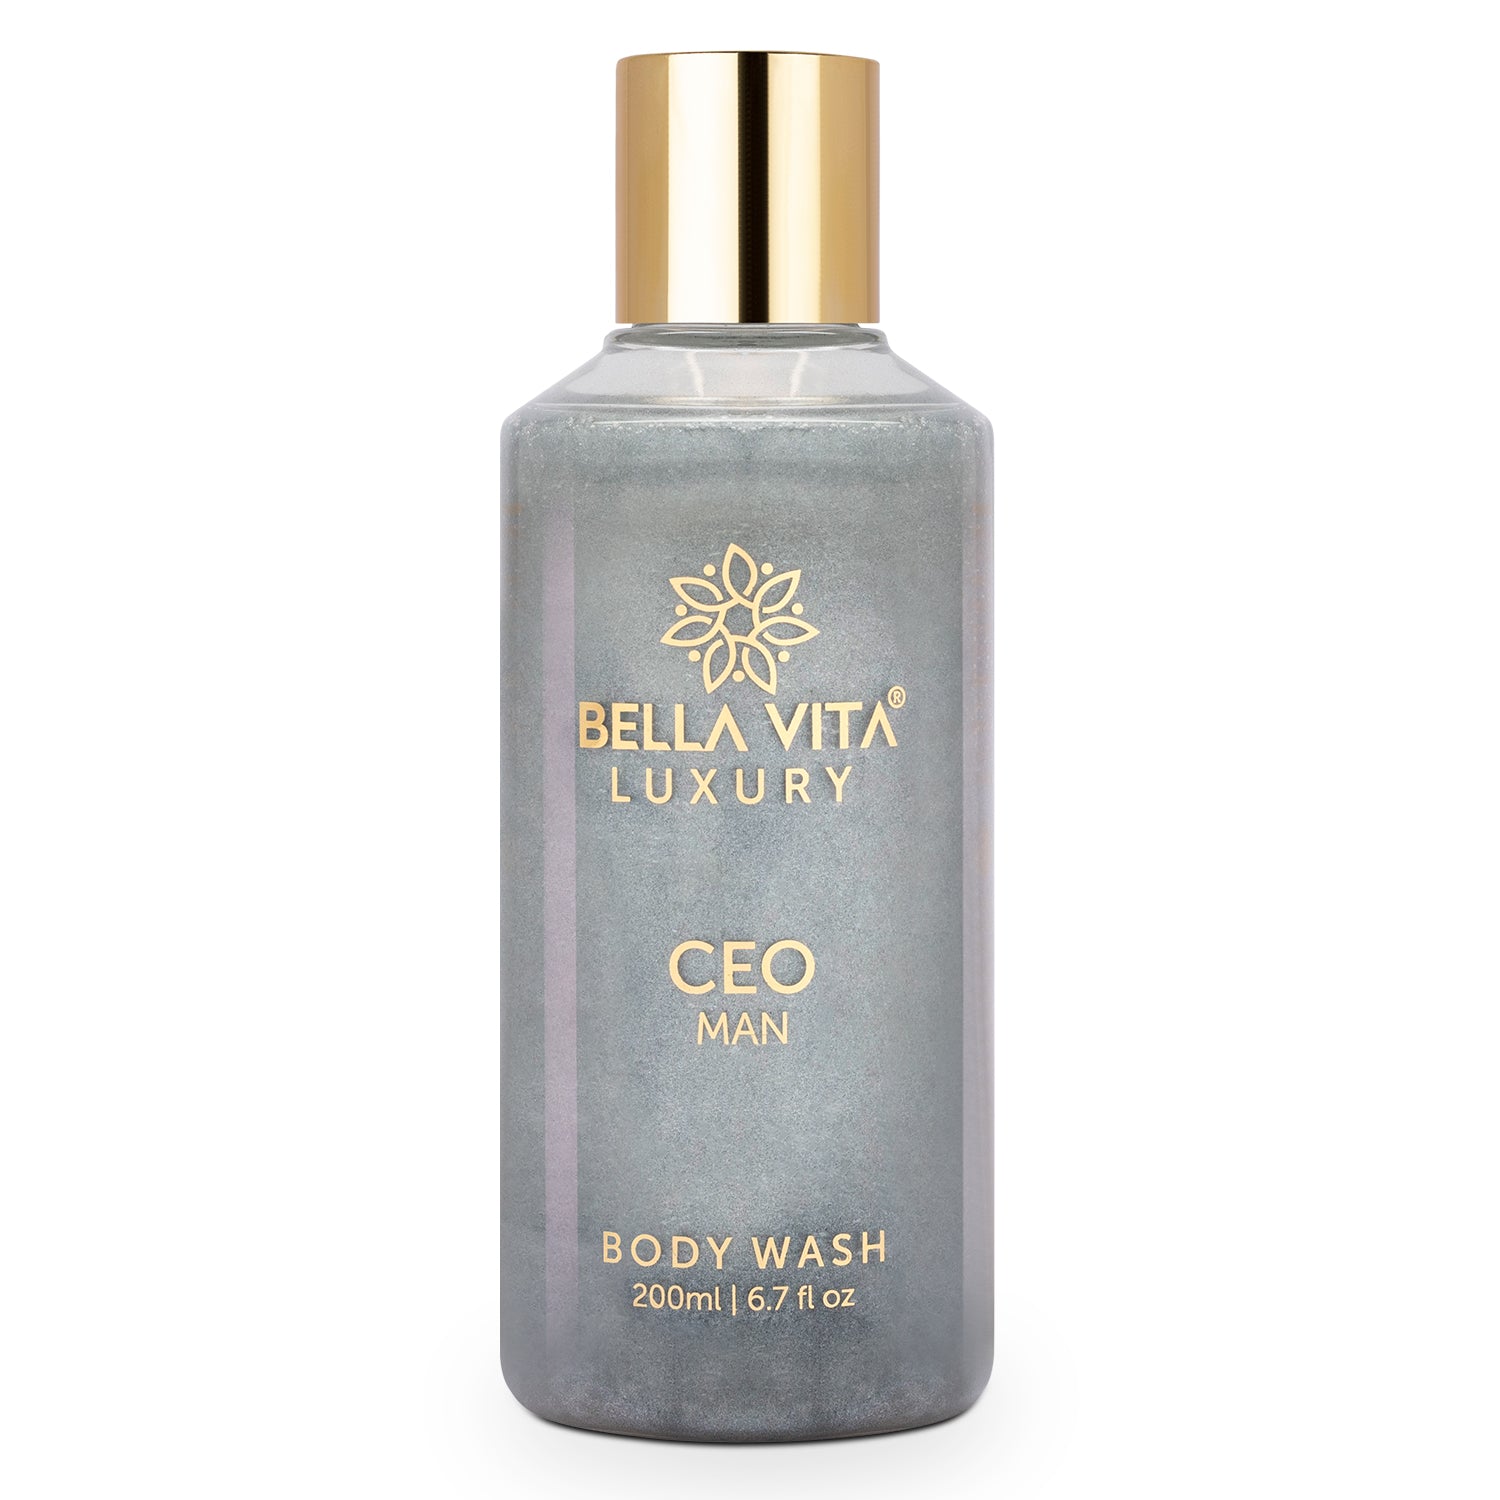 CEO MAN Body Wash - Bella Vita Luxury